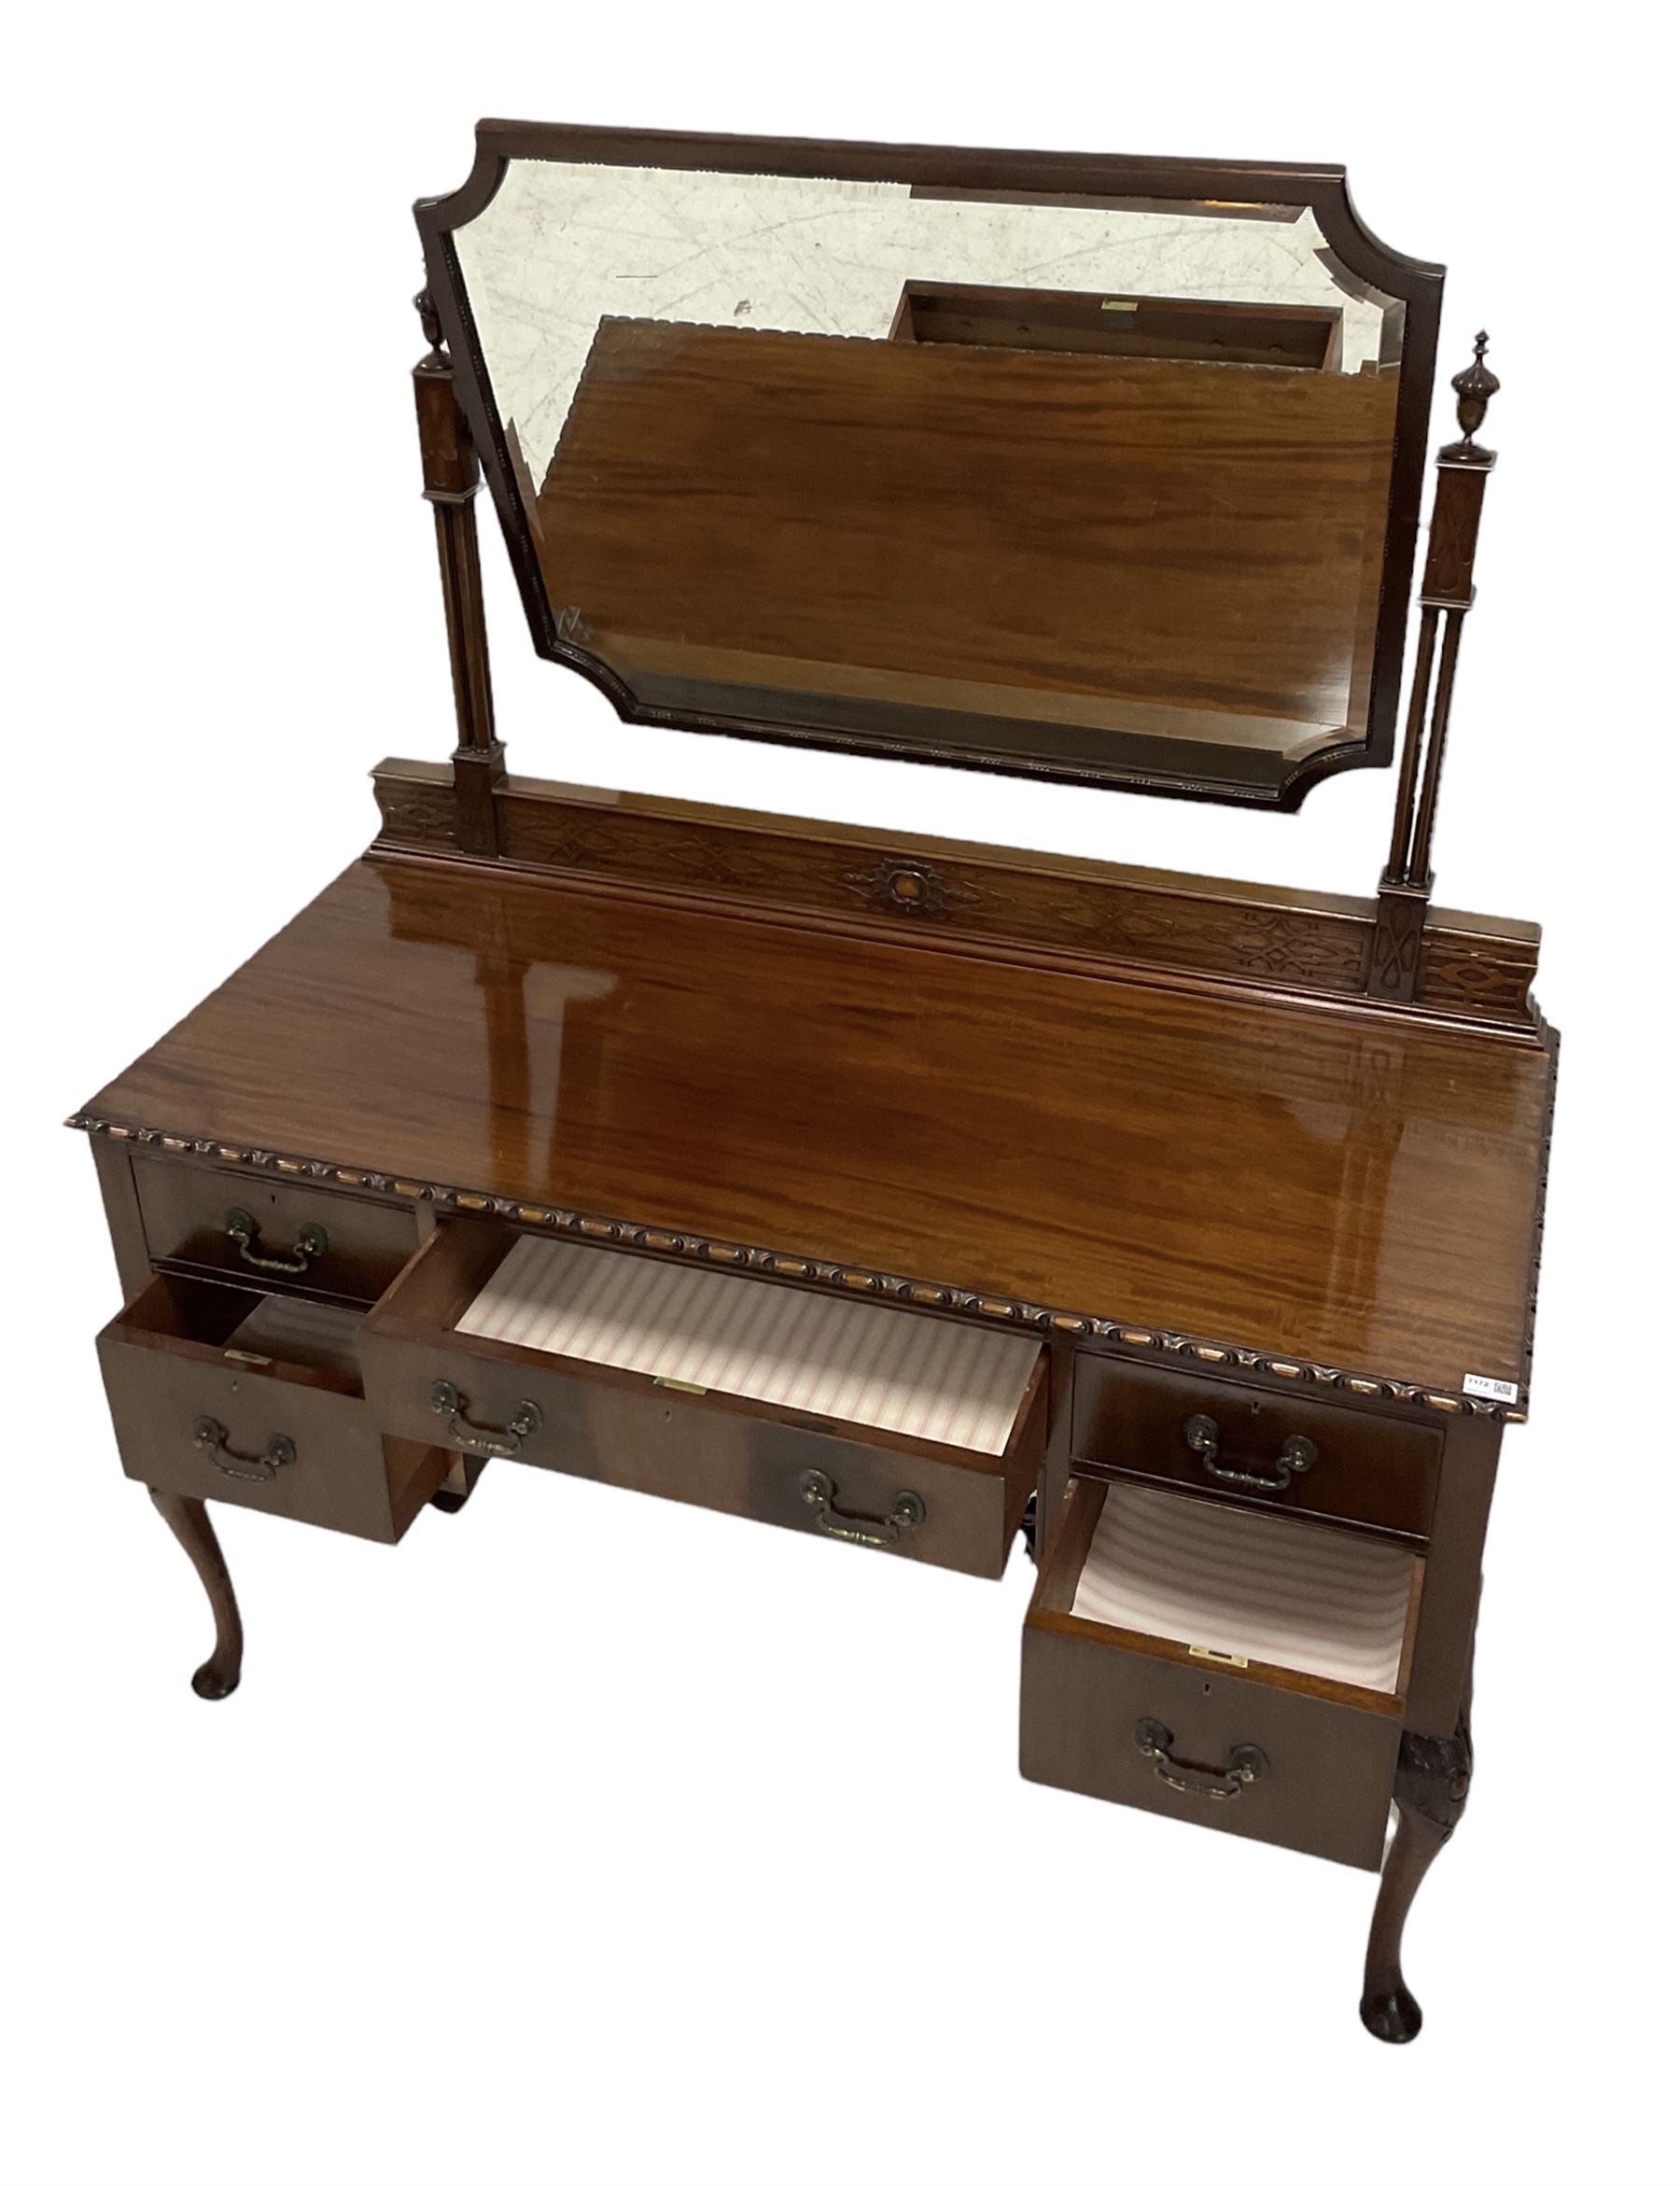 20th century mahogany dressing table - Image 2 of 6